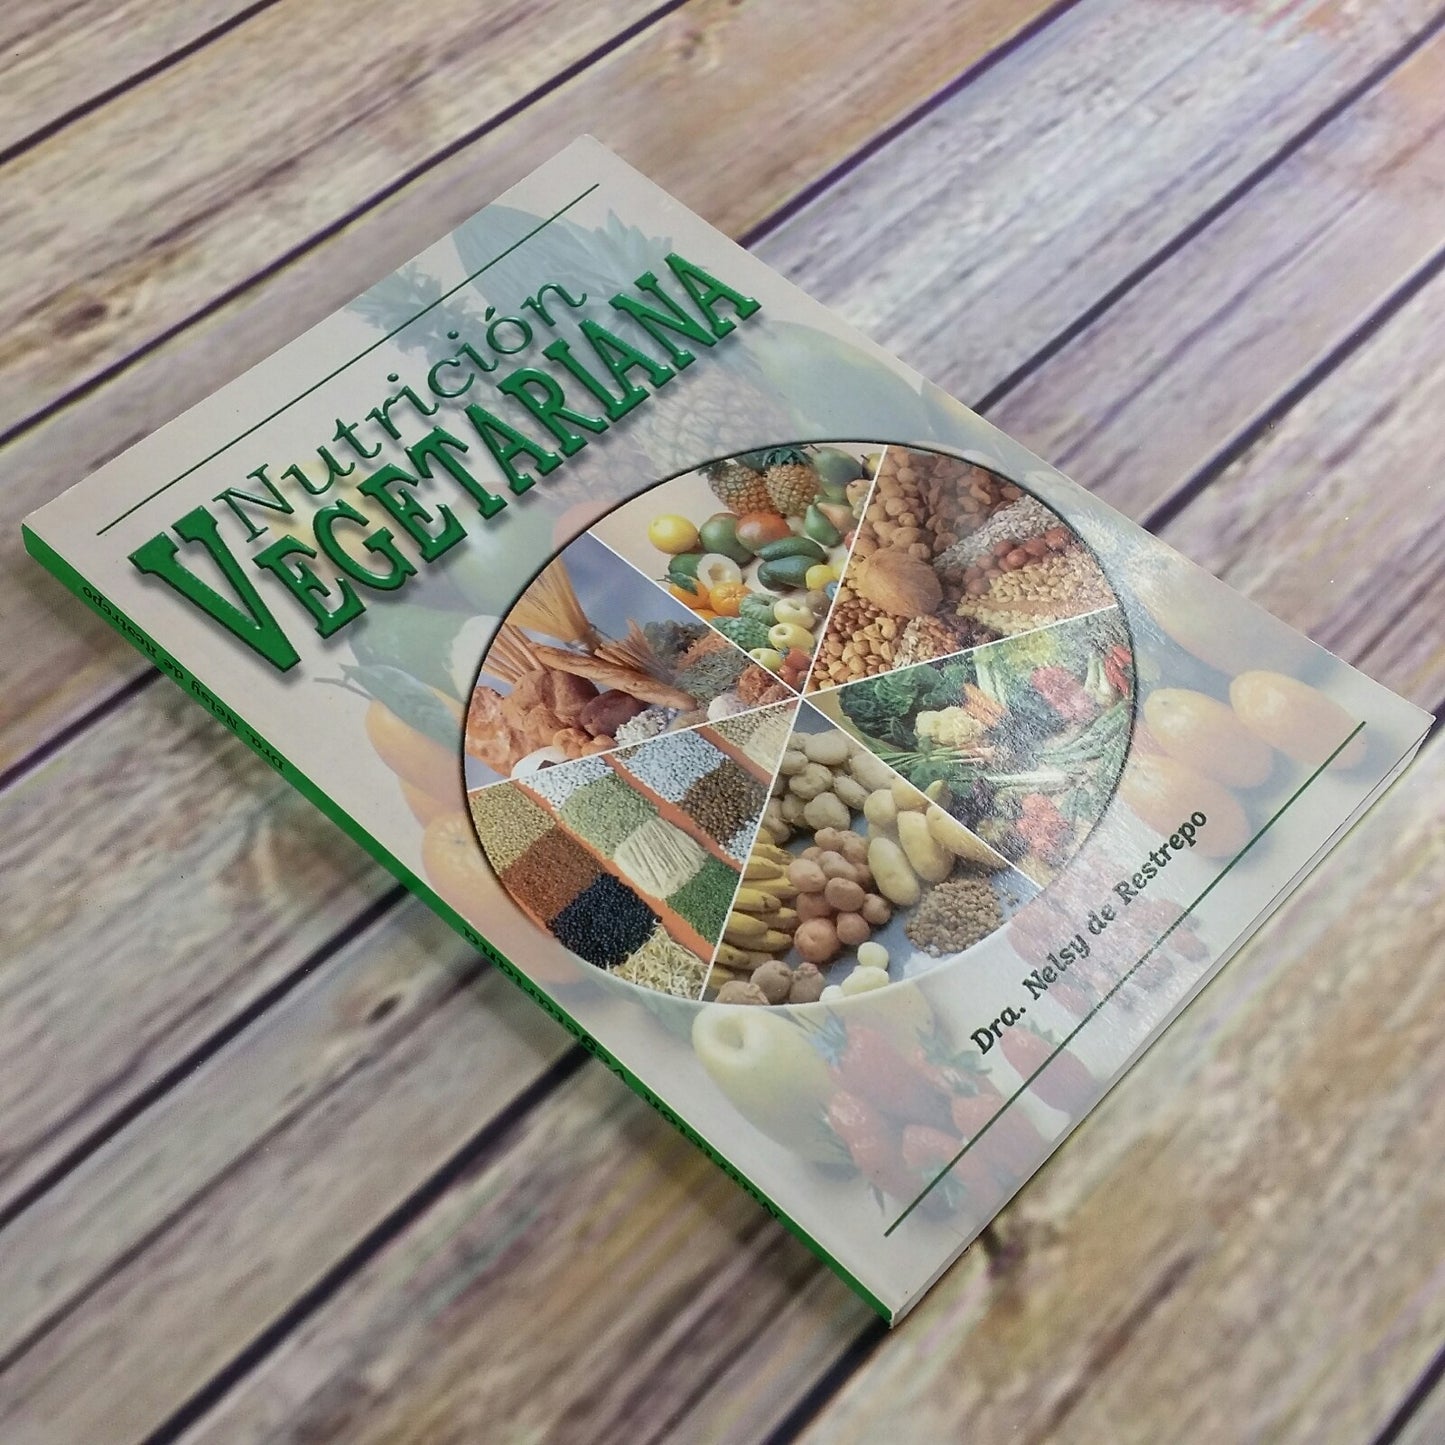 Nutricion Vegetariana Dra elsy De Restrepo Spanish Espanol Todo Book 1998 - At Grandma's Table